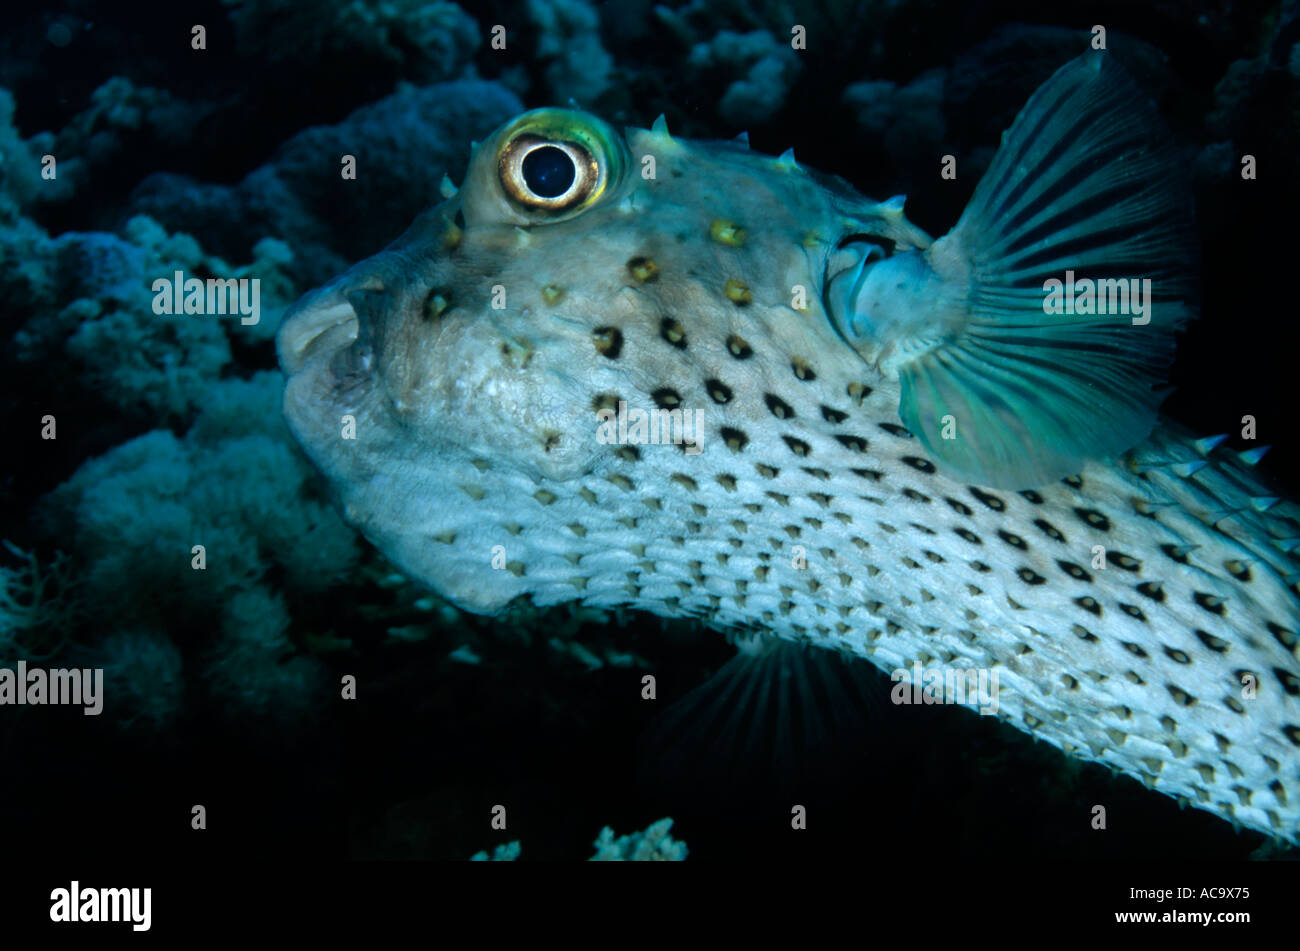 Egypt Red Sea Shab Gotta Wadi Gamel - Portrait Of A Freckled Porcupine Fish Stock Photo